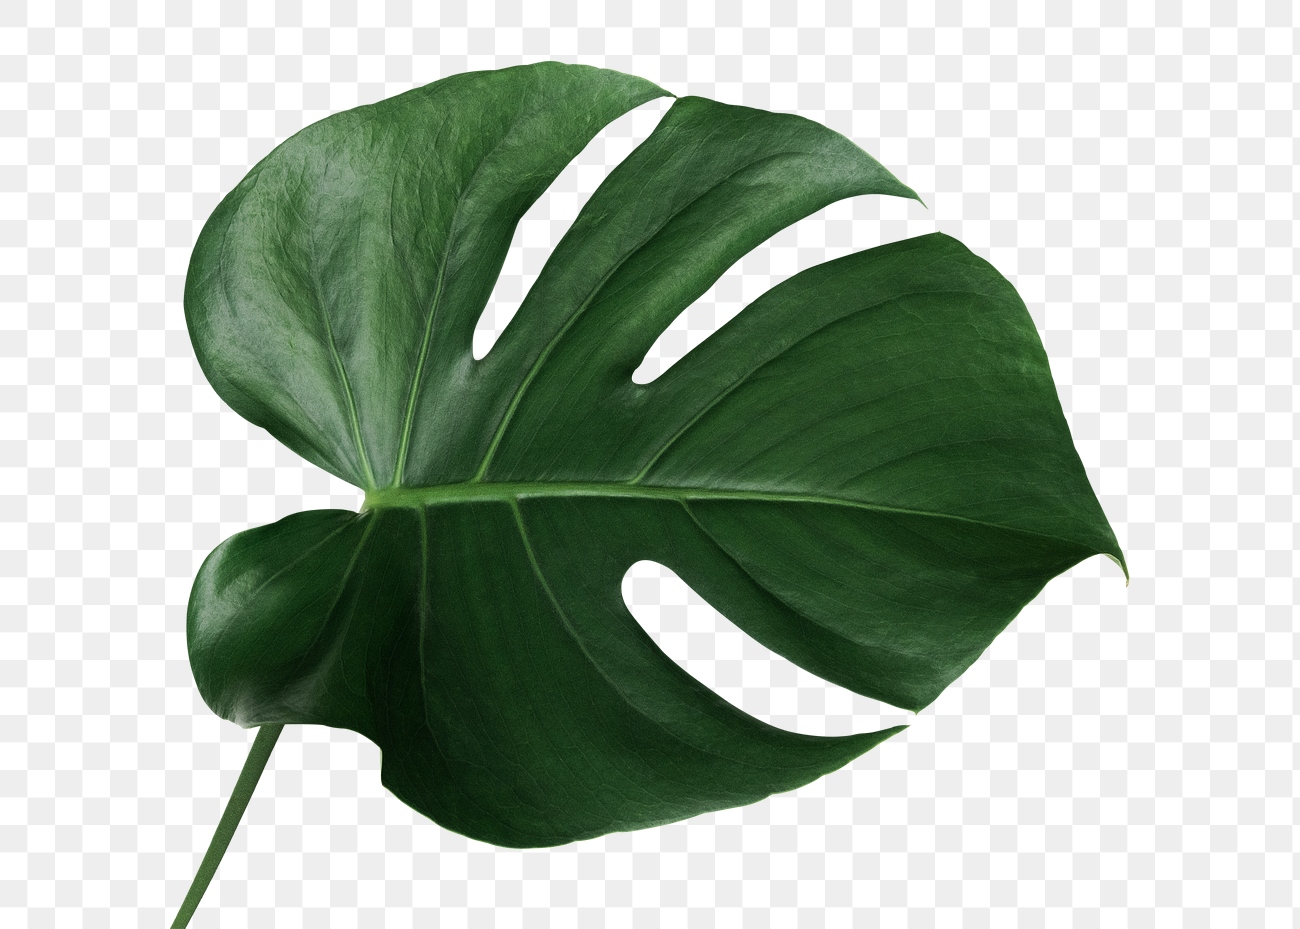 Split leaf philodendron, monstera plant | Premium PNG Sticker - rawpixel